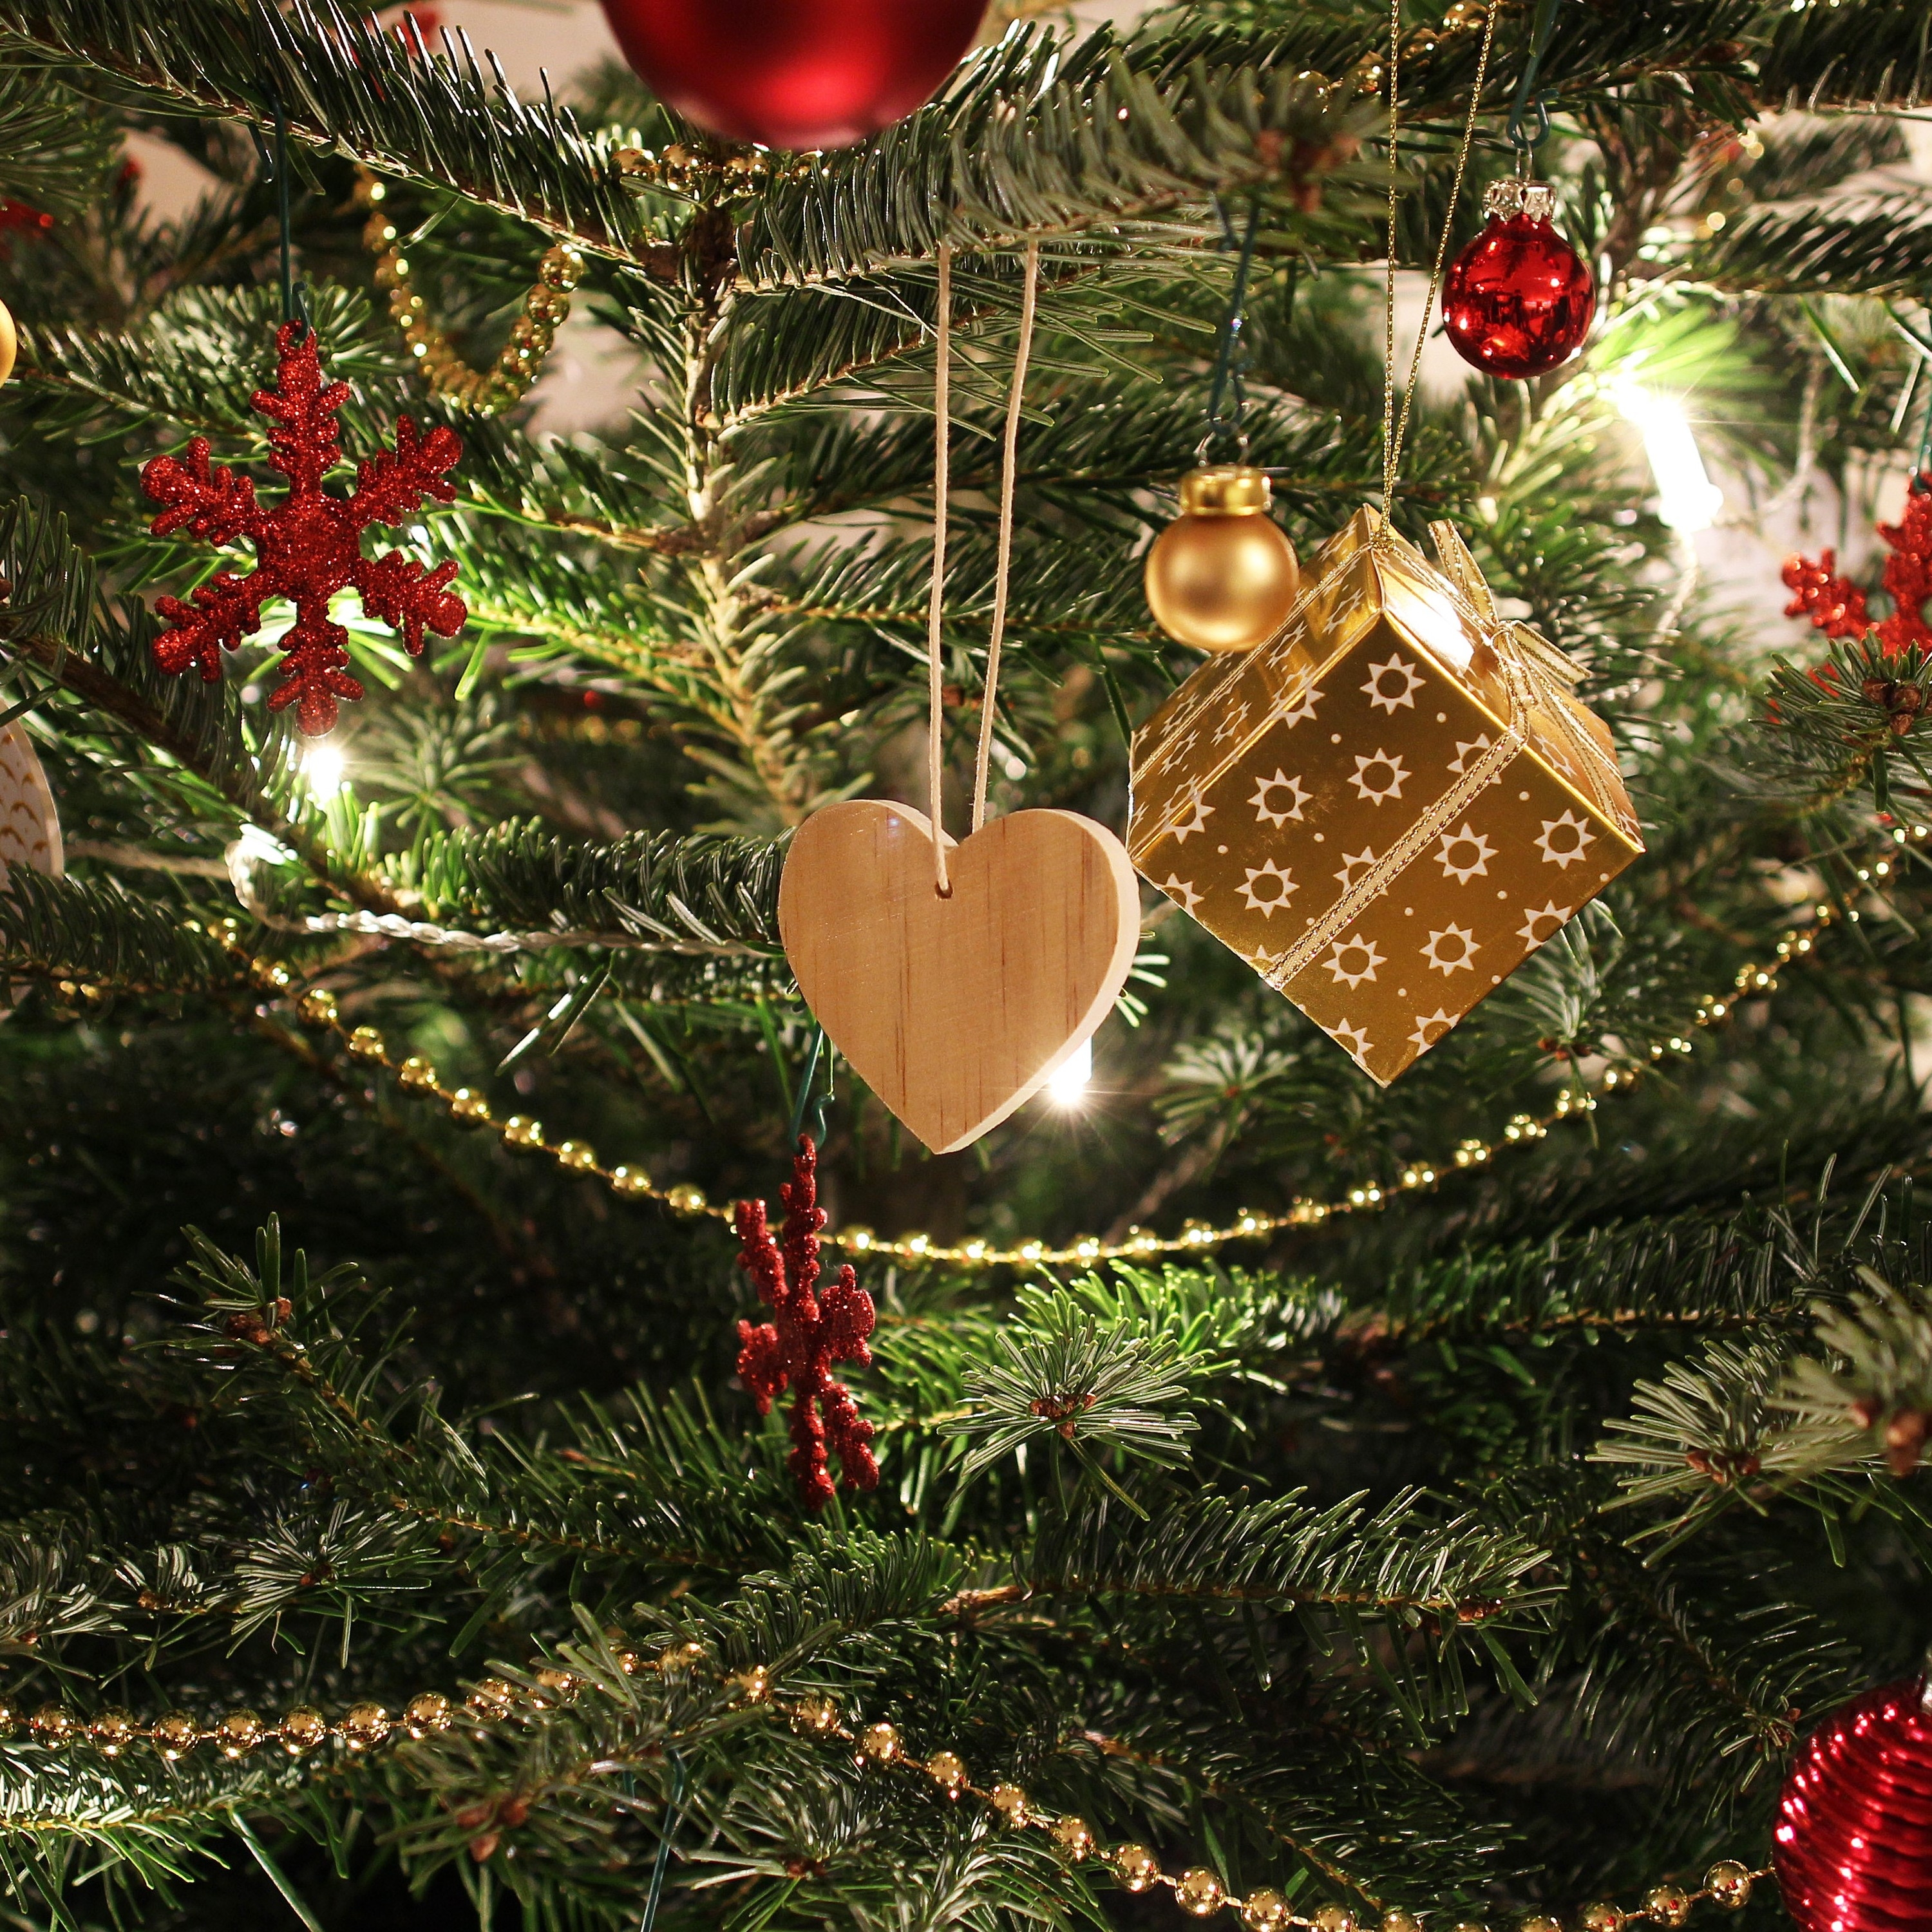 Our Special Christmas: 50 Essential Season Classics for Your Family to Enjoy